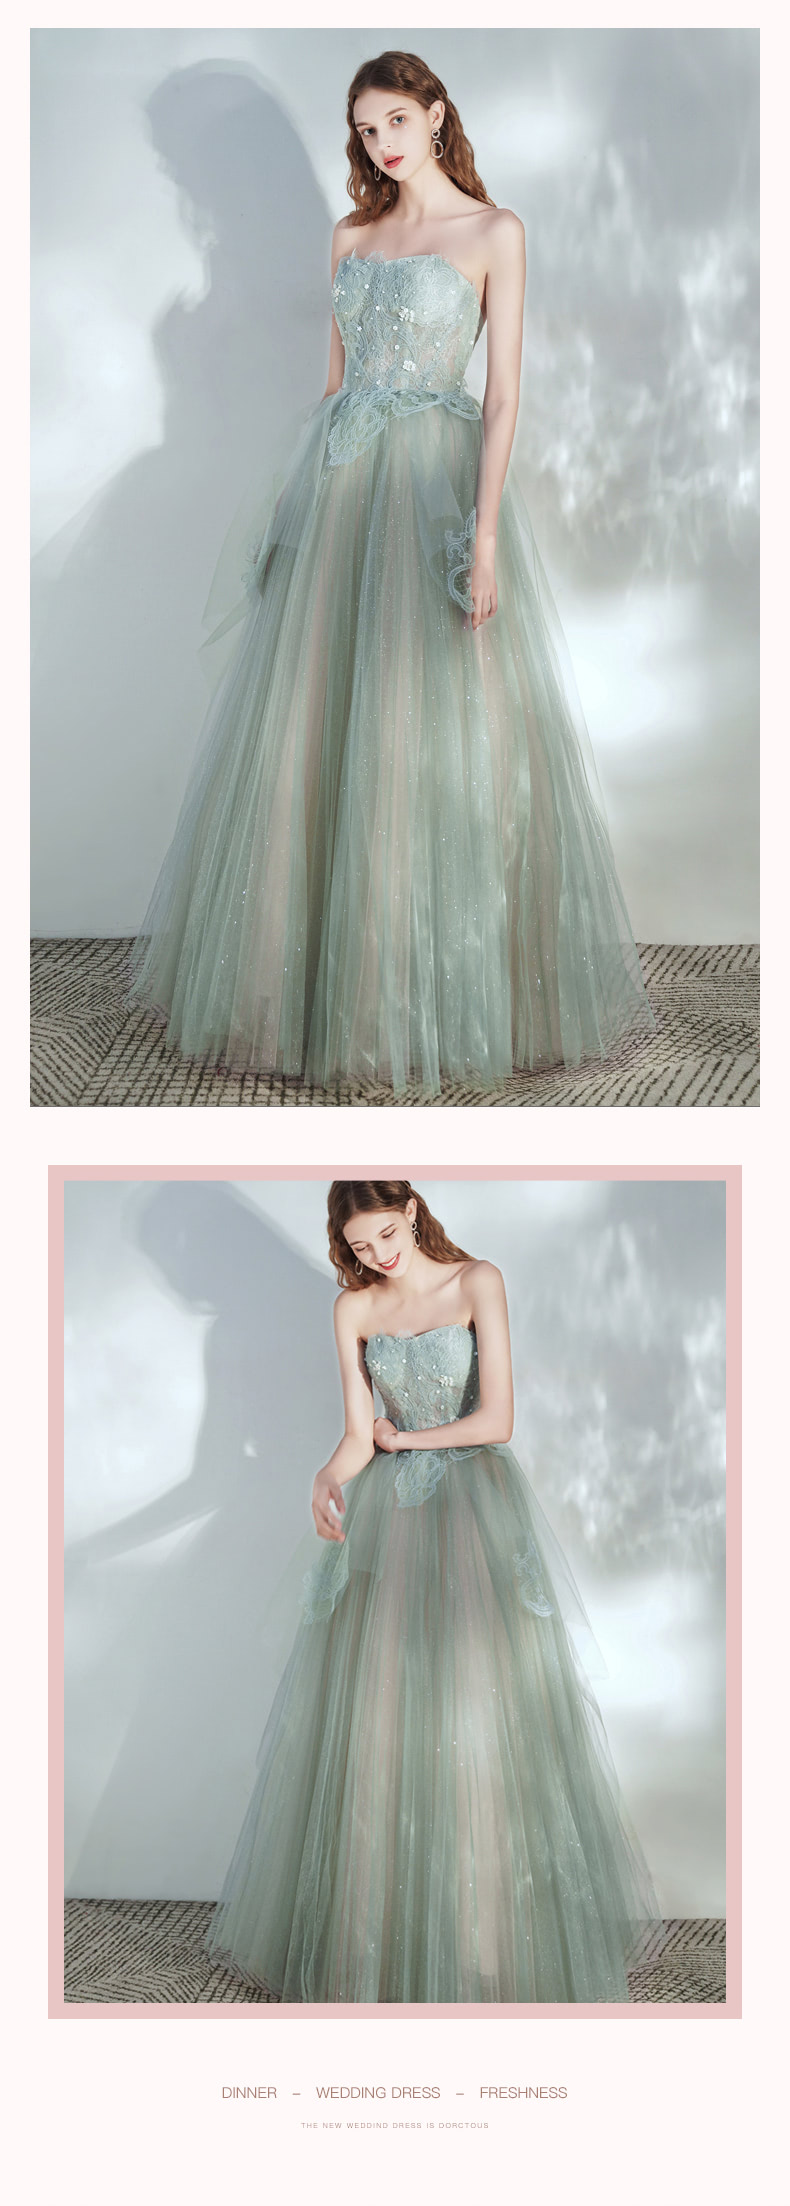 Elegant-Light-Green-Boho-Evening-Dress-Ball-Gown-Dance-Costume13